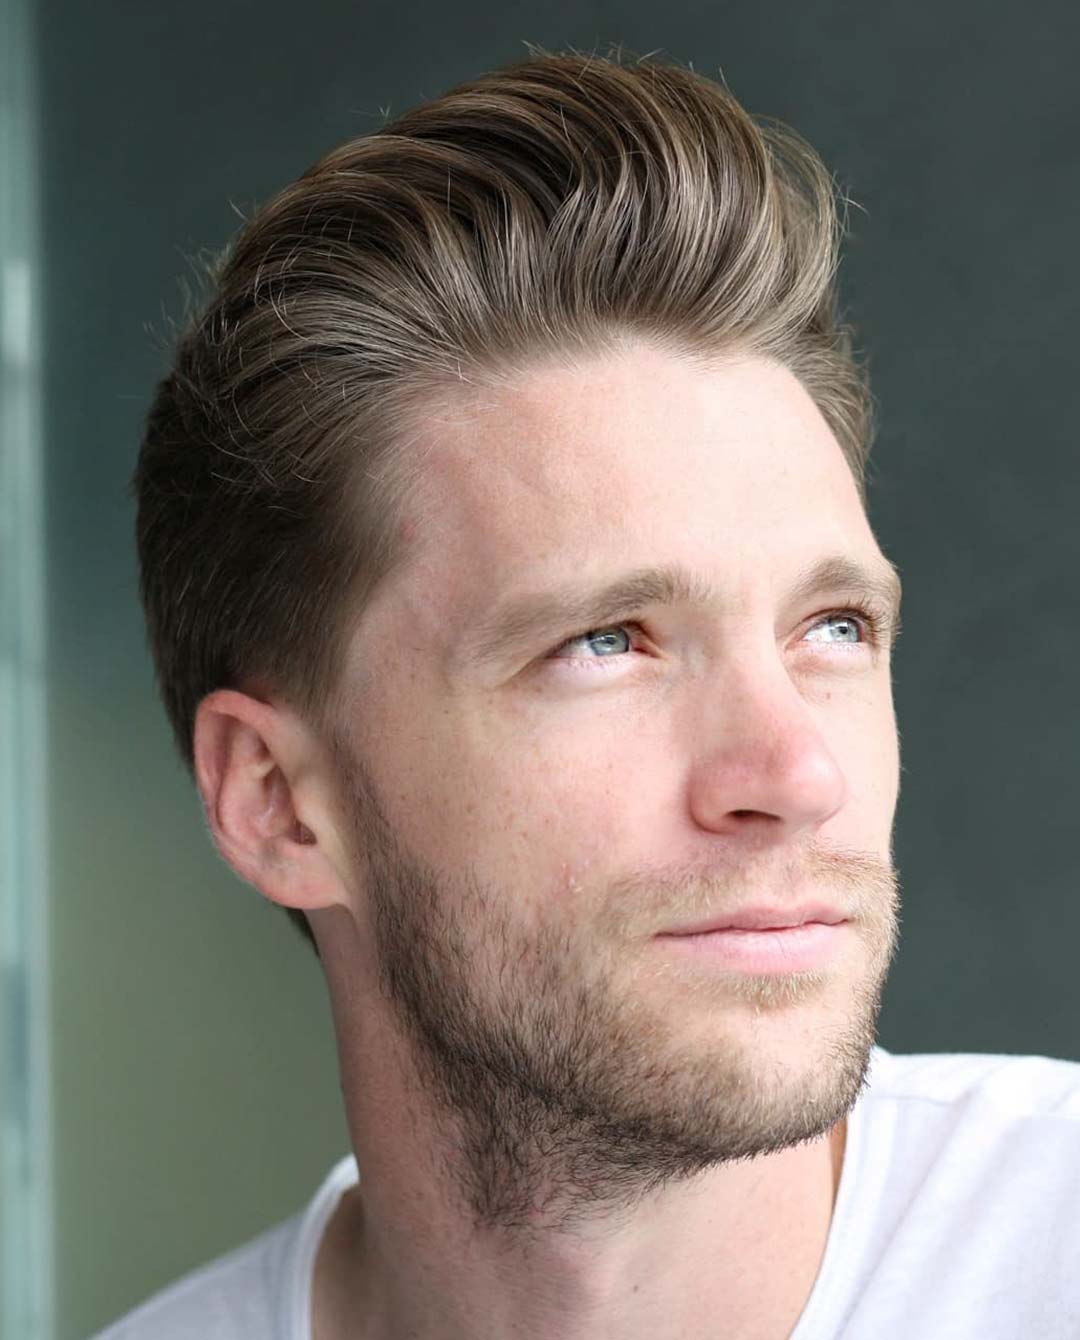 Medium-Length Haircut for Men